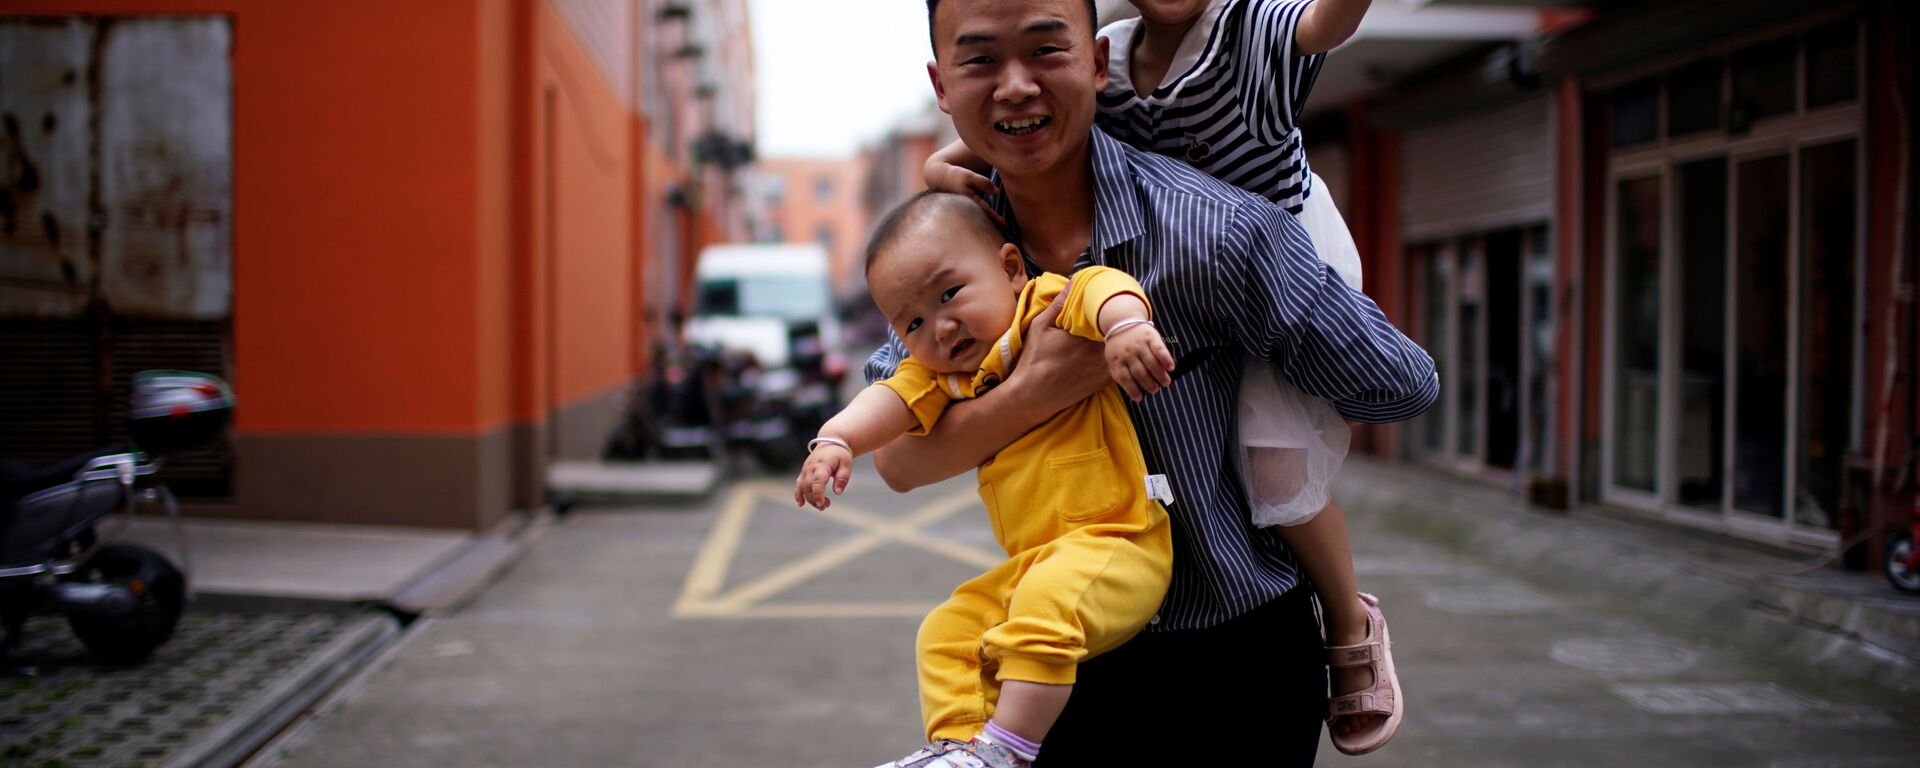 Отец с двумя детьми в Китае - 俄羅斯衛星通訊社, 1920, 05.06.2021